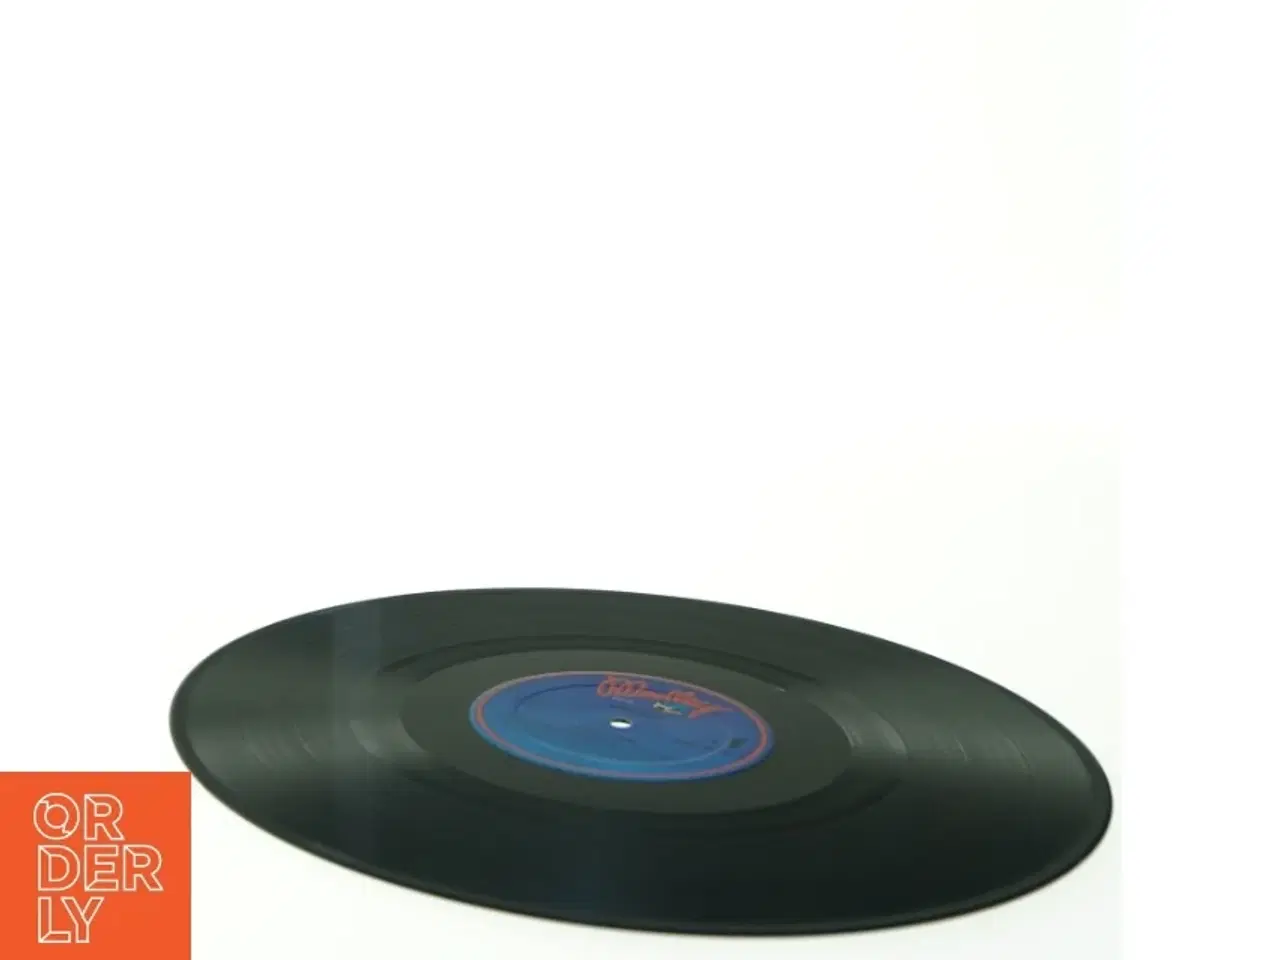 Billede 2 - OneTwo - Hvide Løgne vinylplade fra Medley Records (str. 31 x 31 cm)